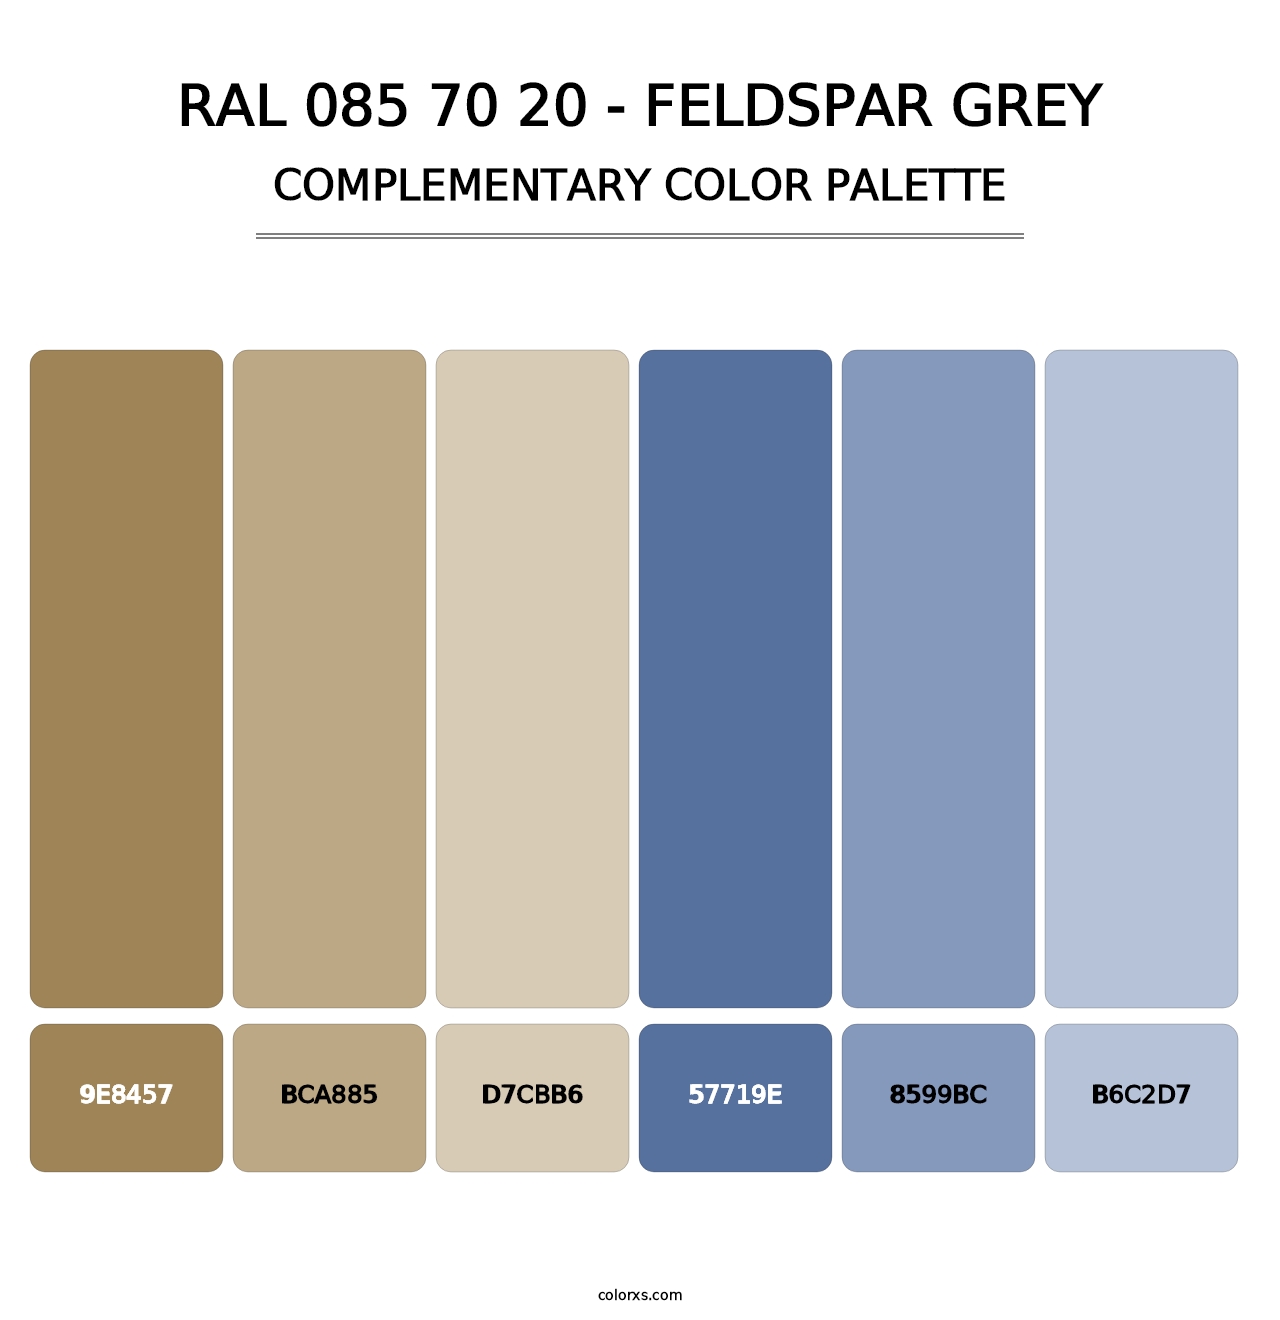 RAL 085 70 20 - Feldspar Grey - Complementary Color Palette